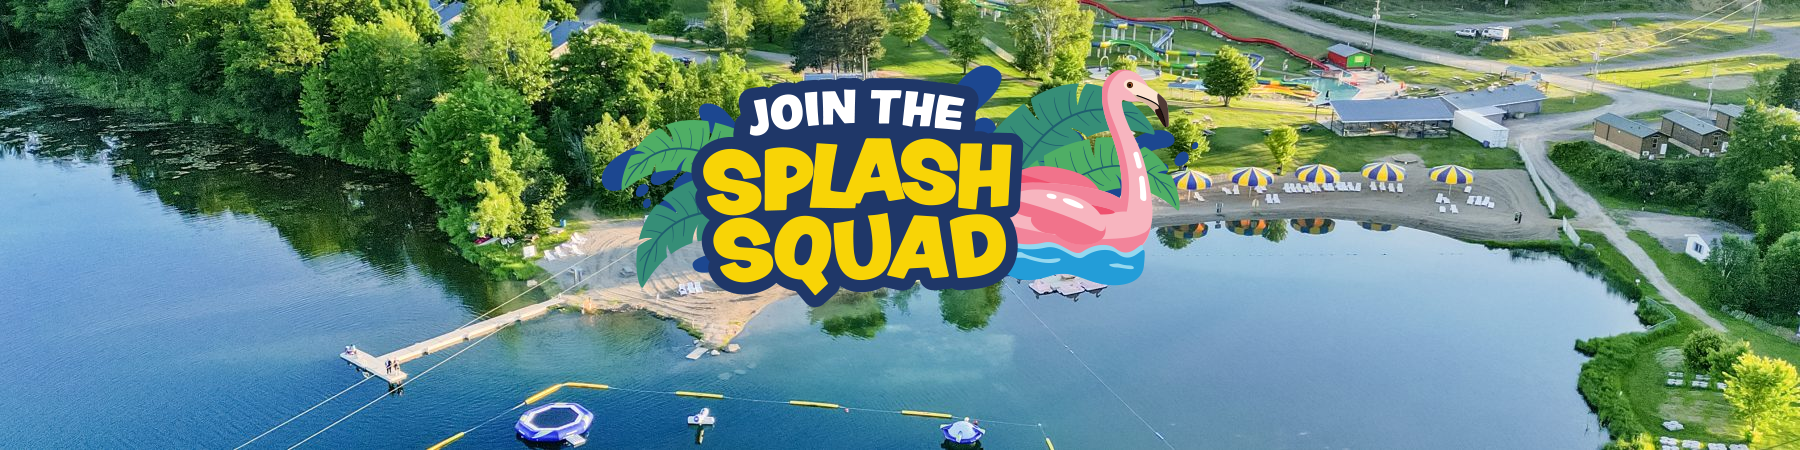 Join the Splash Squad